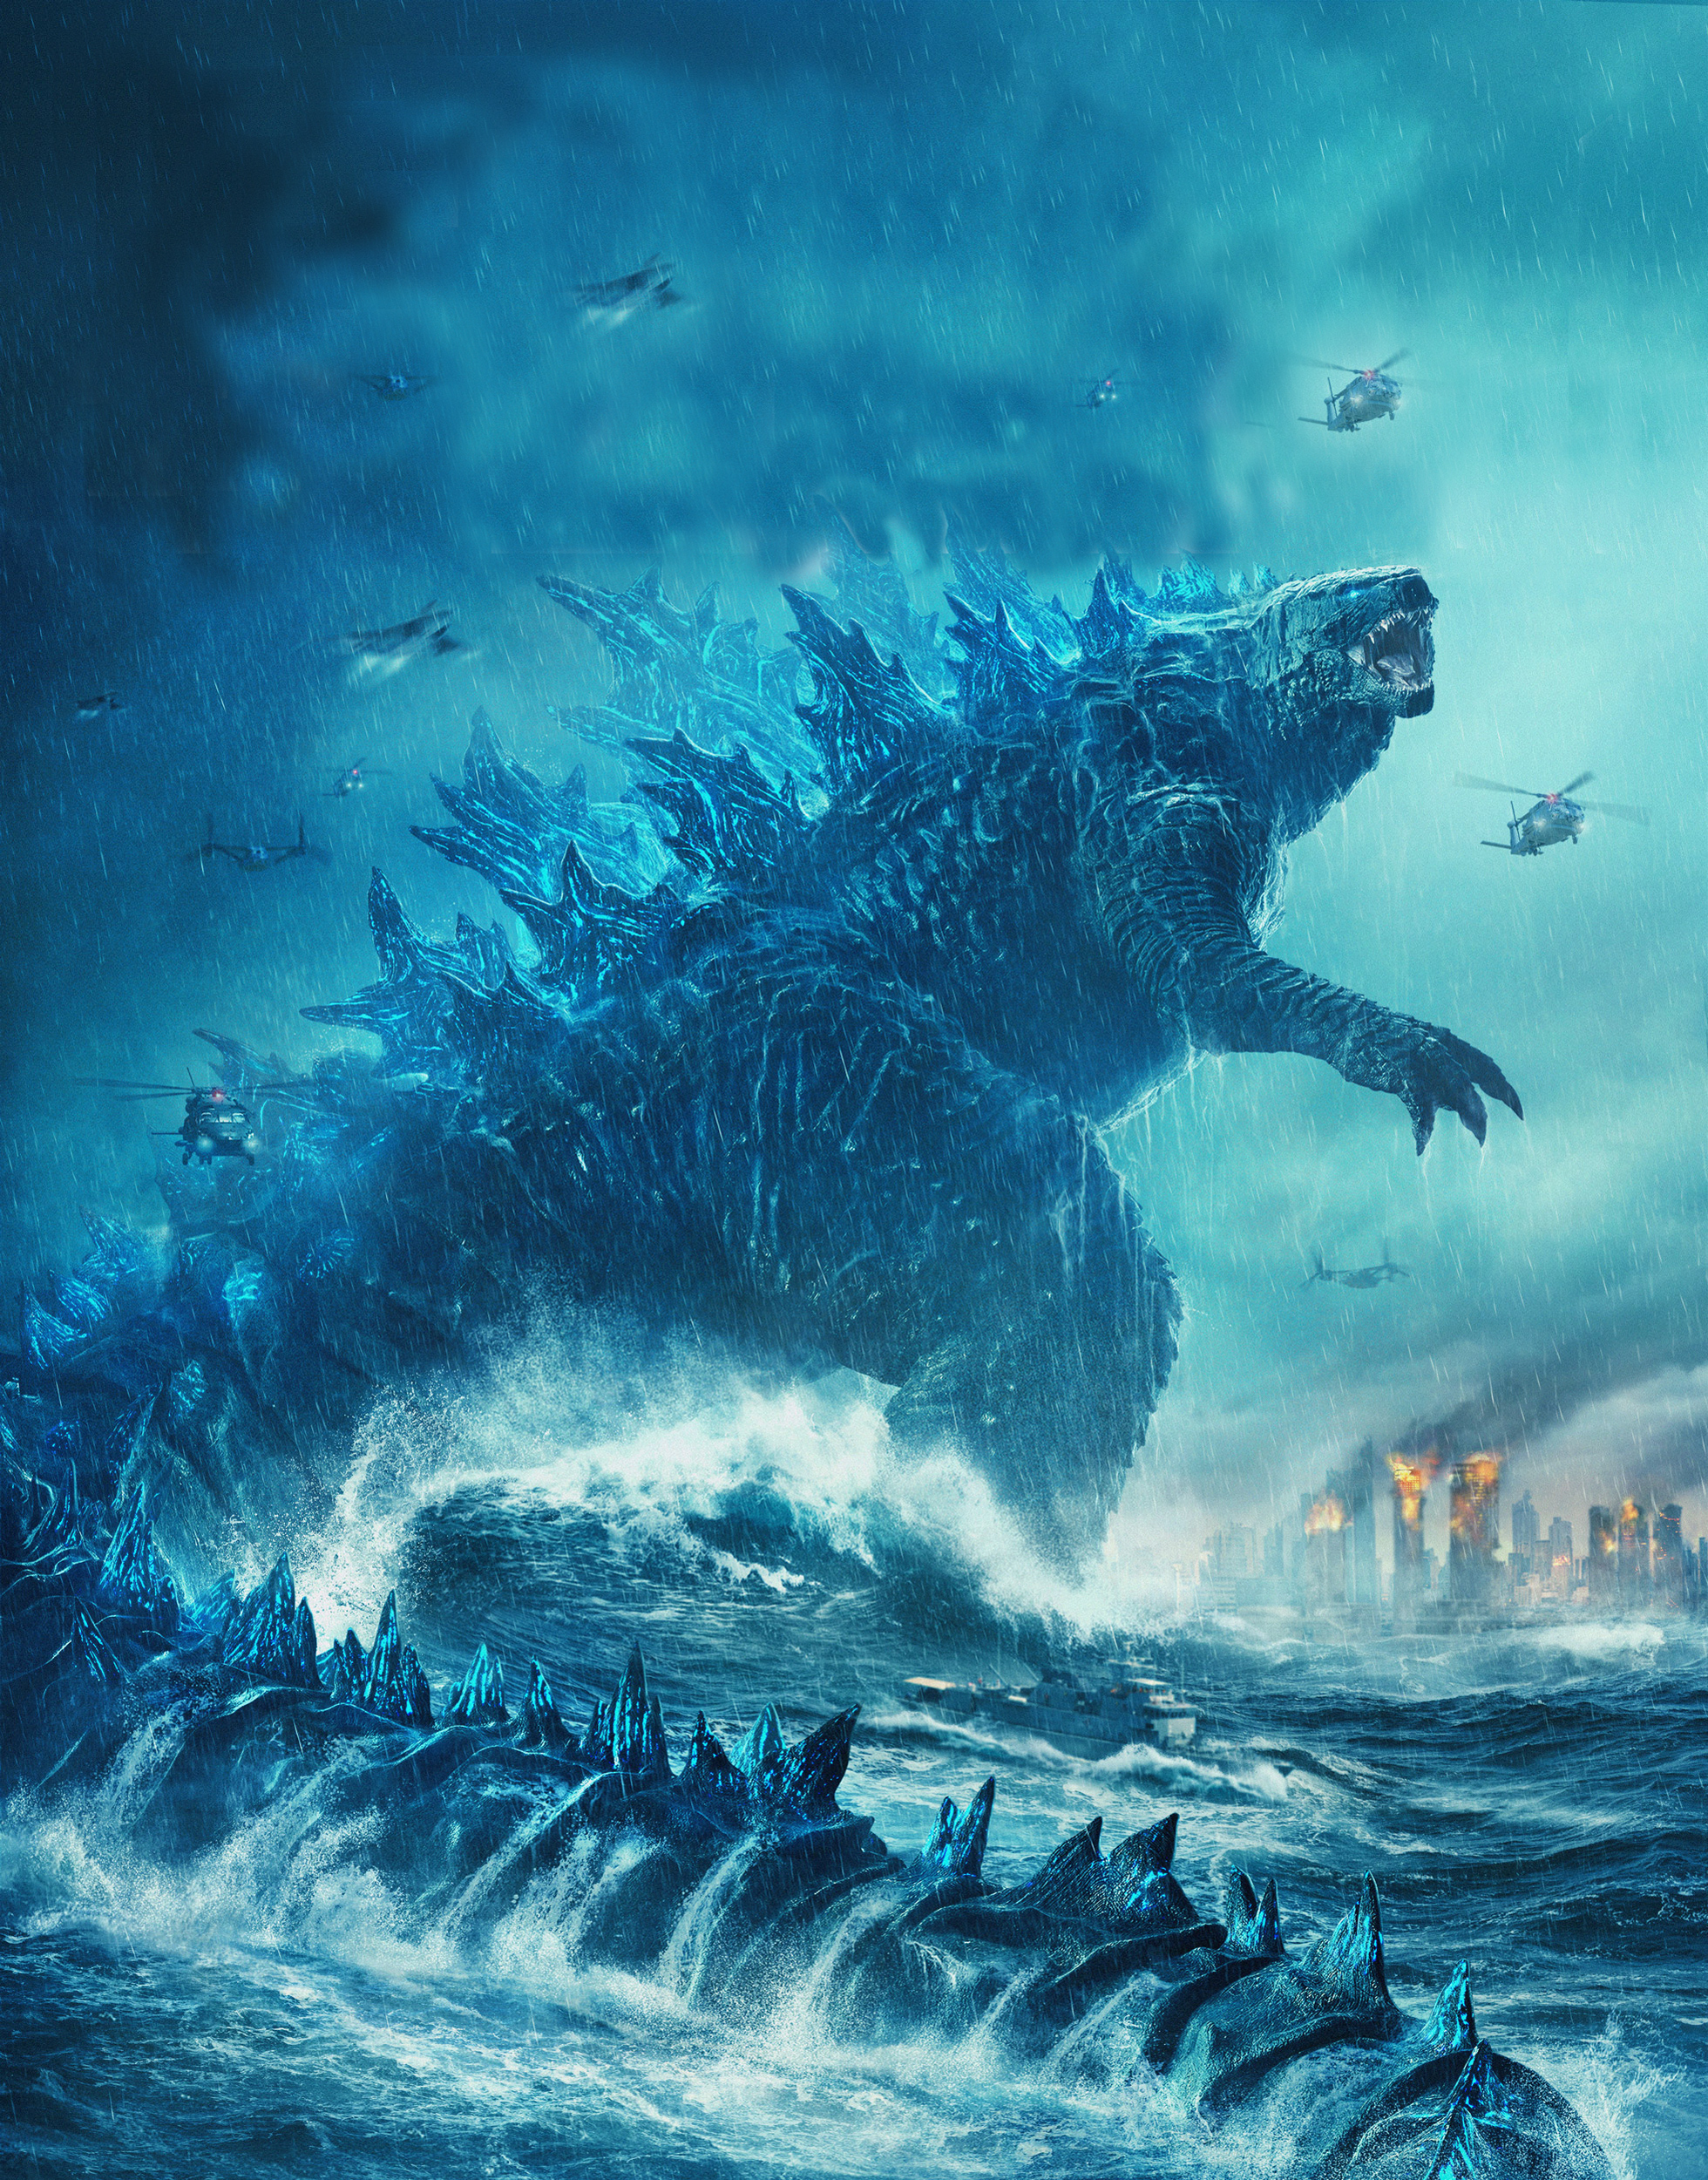 Godzilla 2019 Wallpaper, HD Movies 4K Wallpapers, Images, Photos and